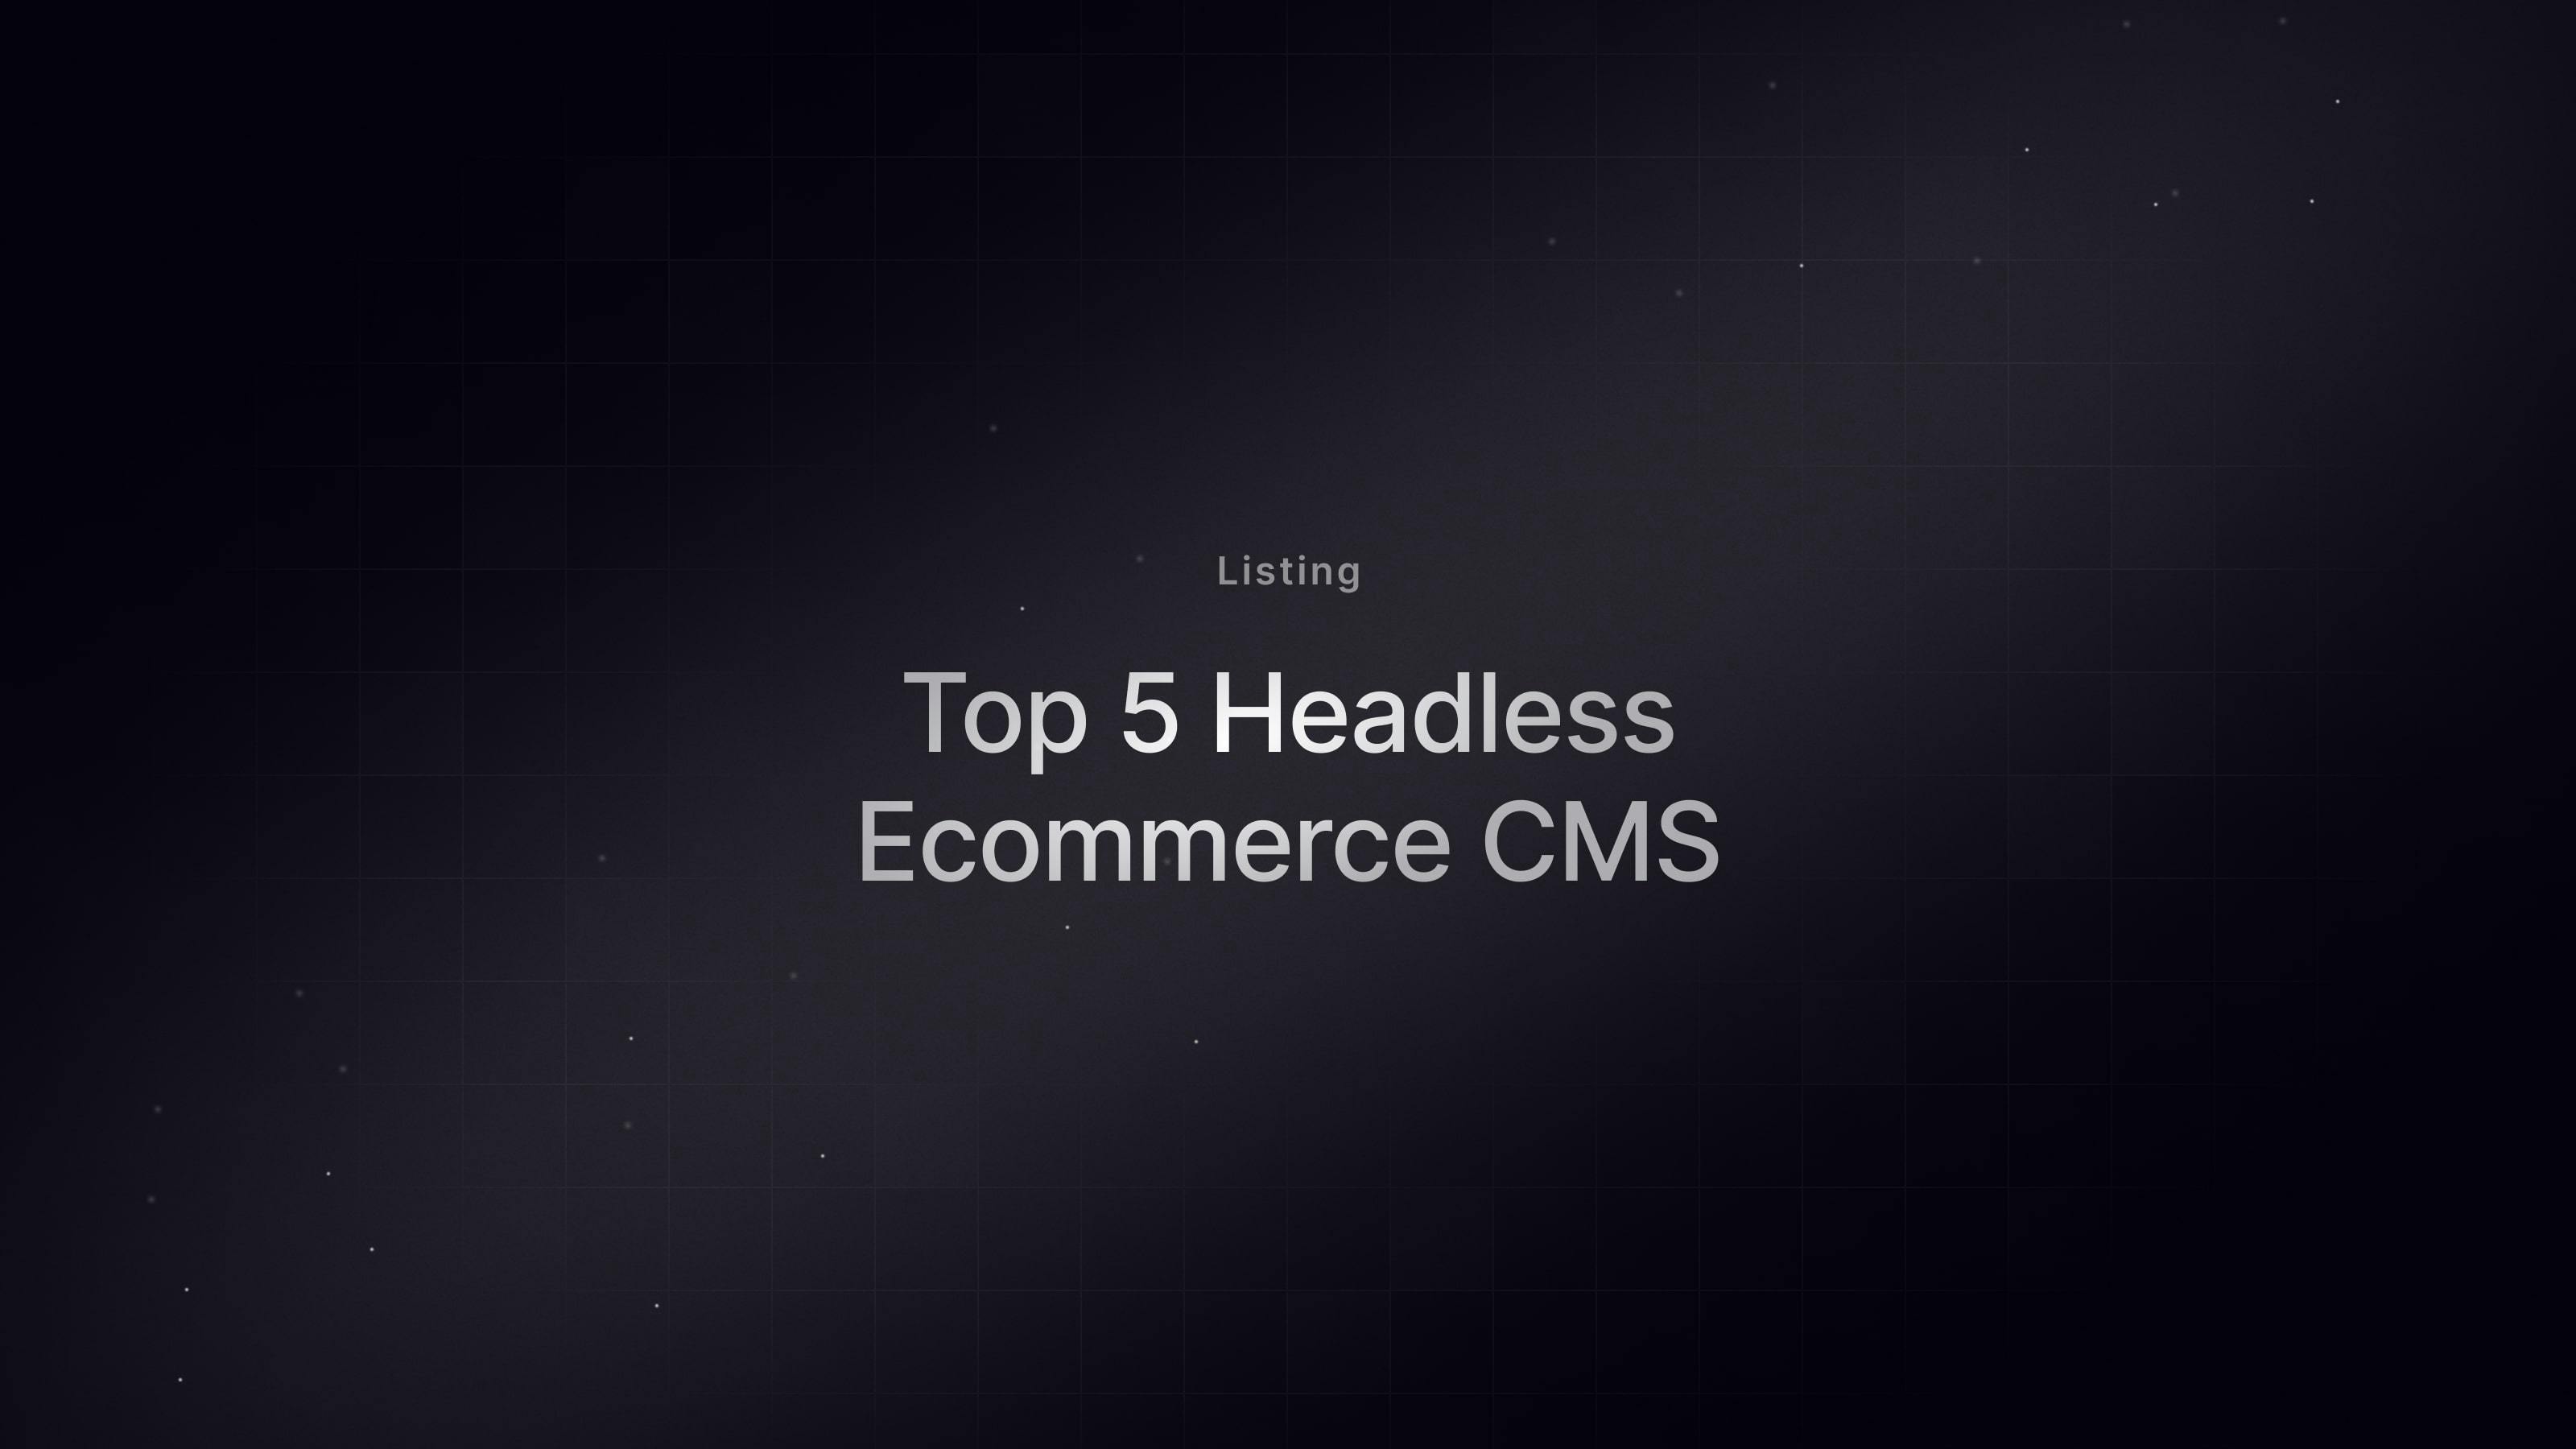 Top 5 Headless Ecommerce CMS